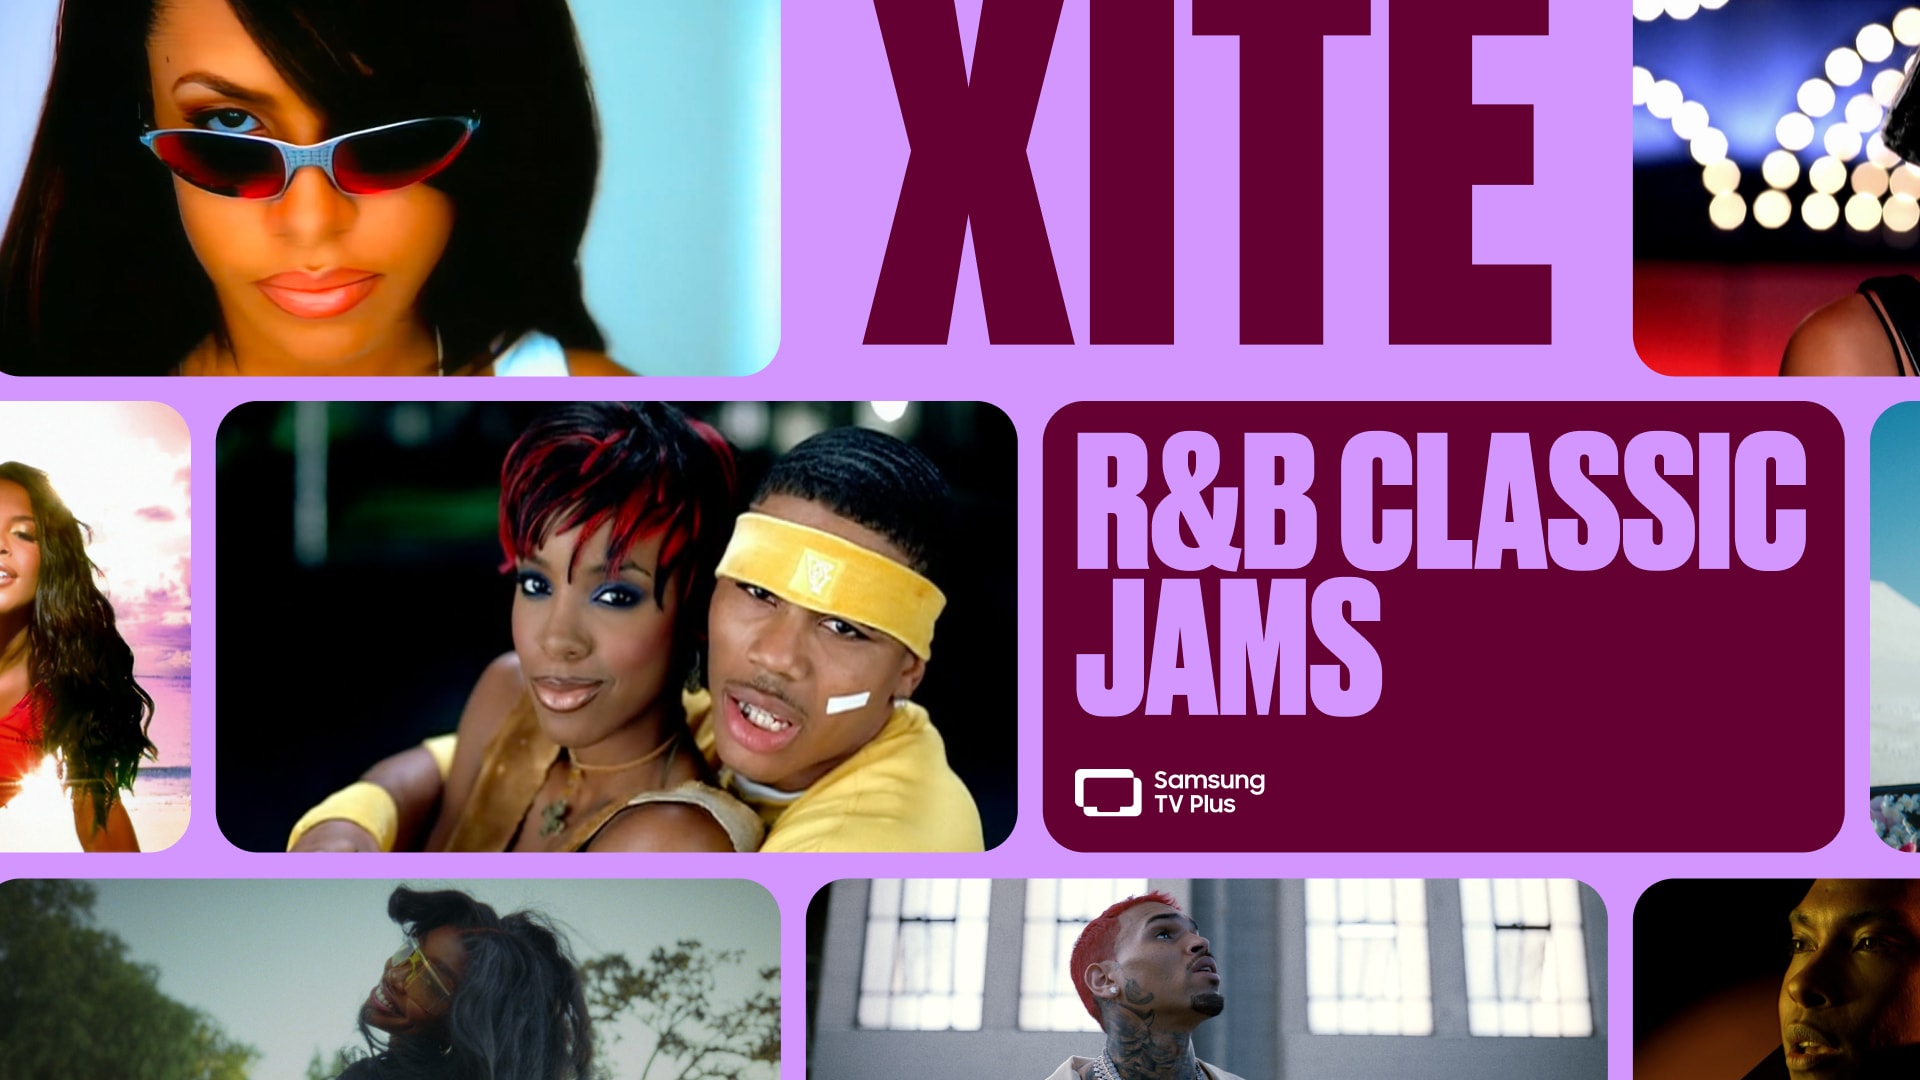 XITE R&B Classic Jams live op Samsung TV Plus!